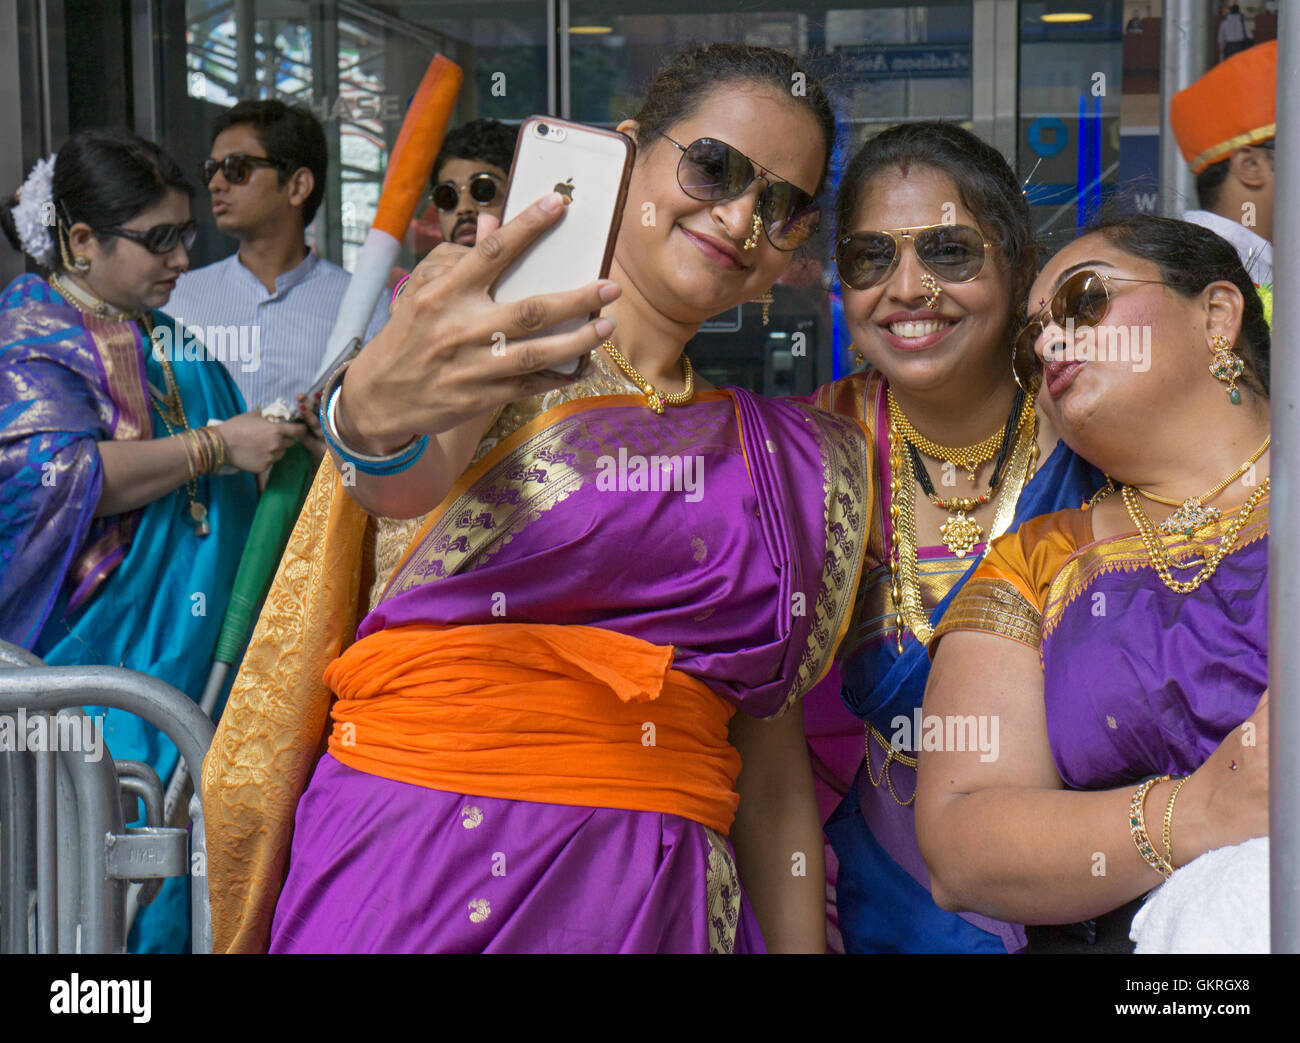 indian girl pinky sharma hot selfi